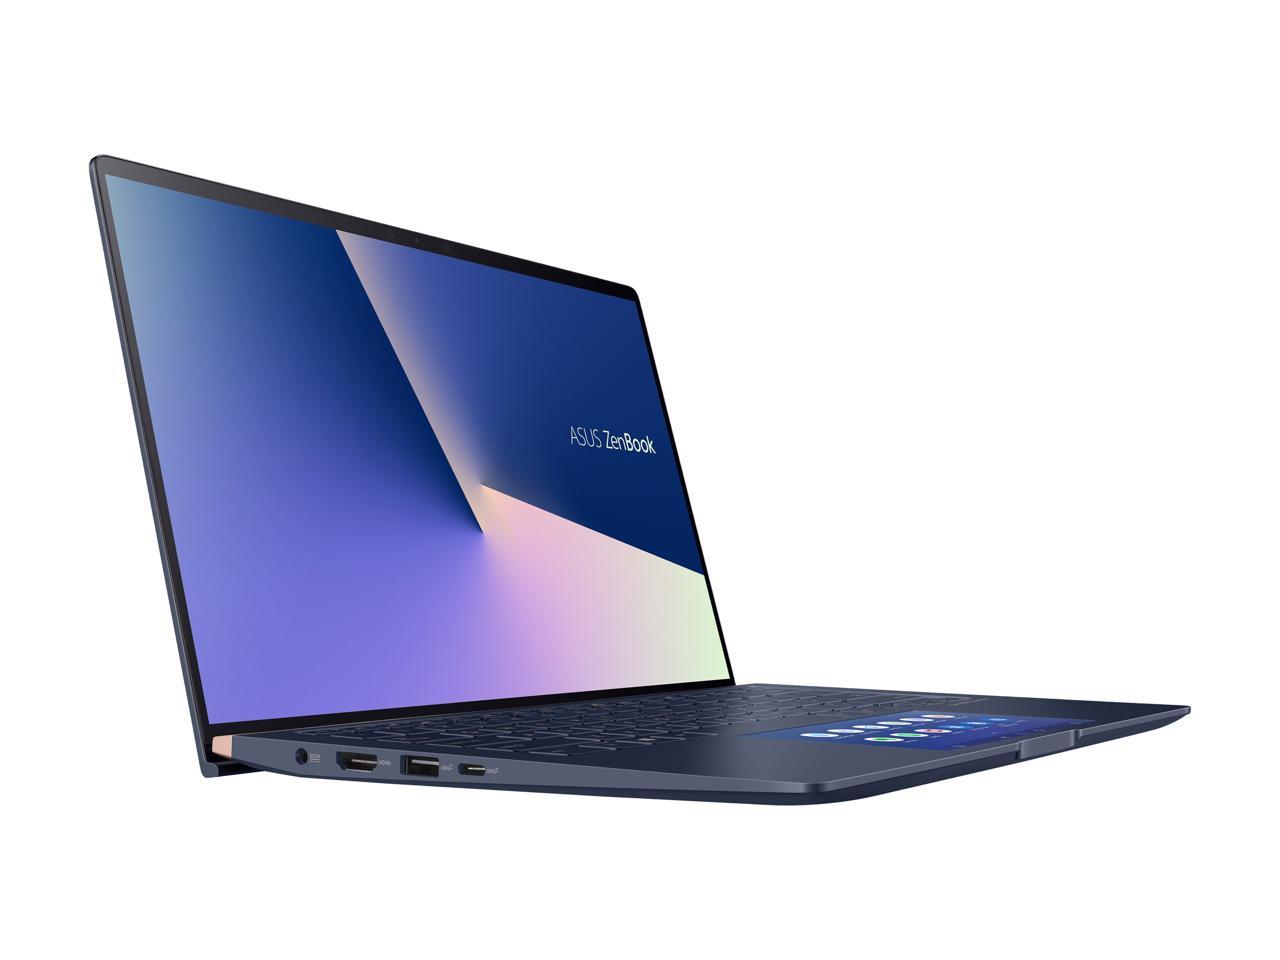 Asus Laptop Zenbook Intel Core I7 10th Gen 10510u 180ghz 16 Gb